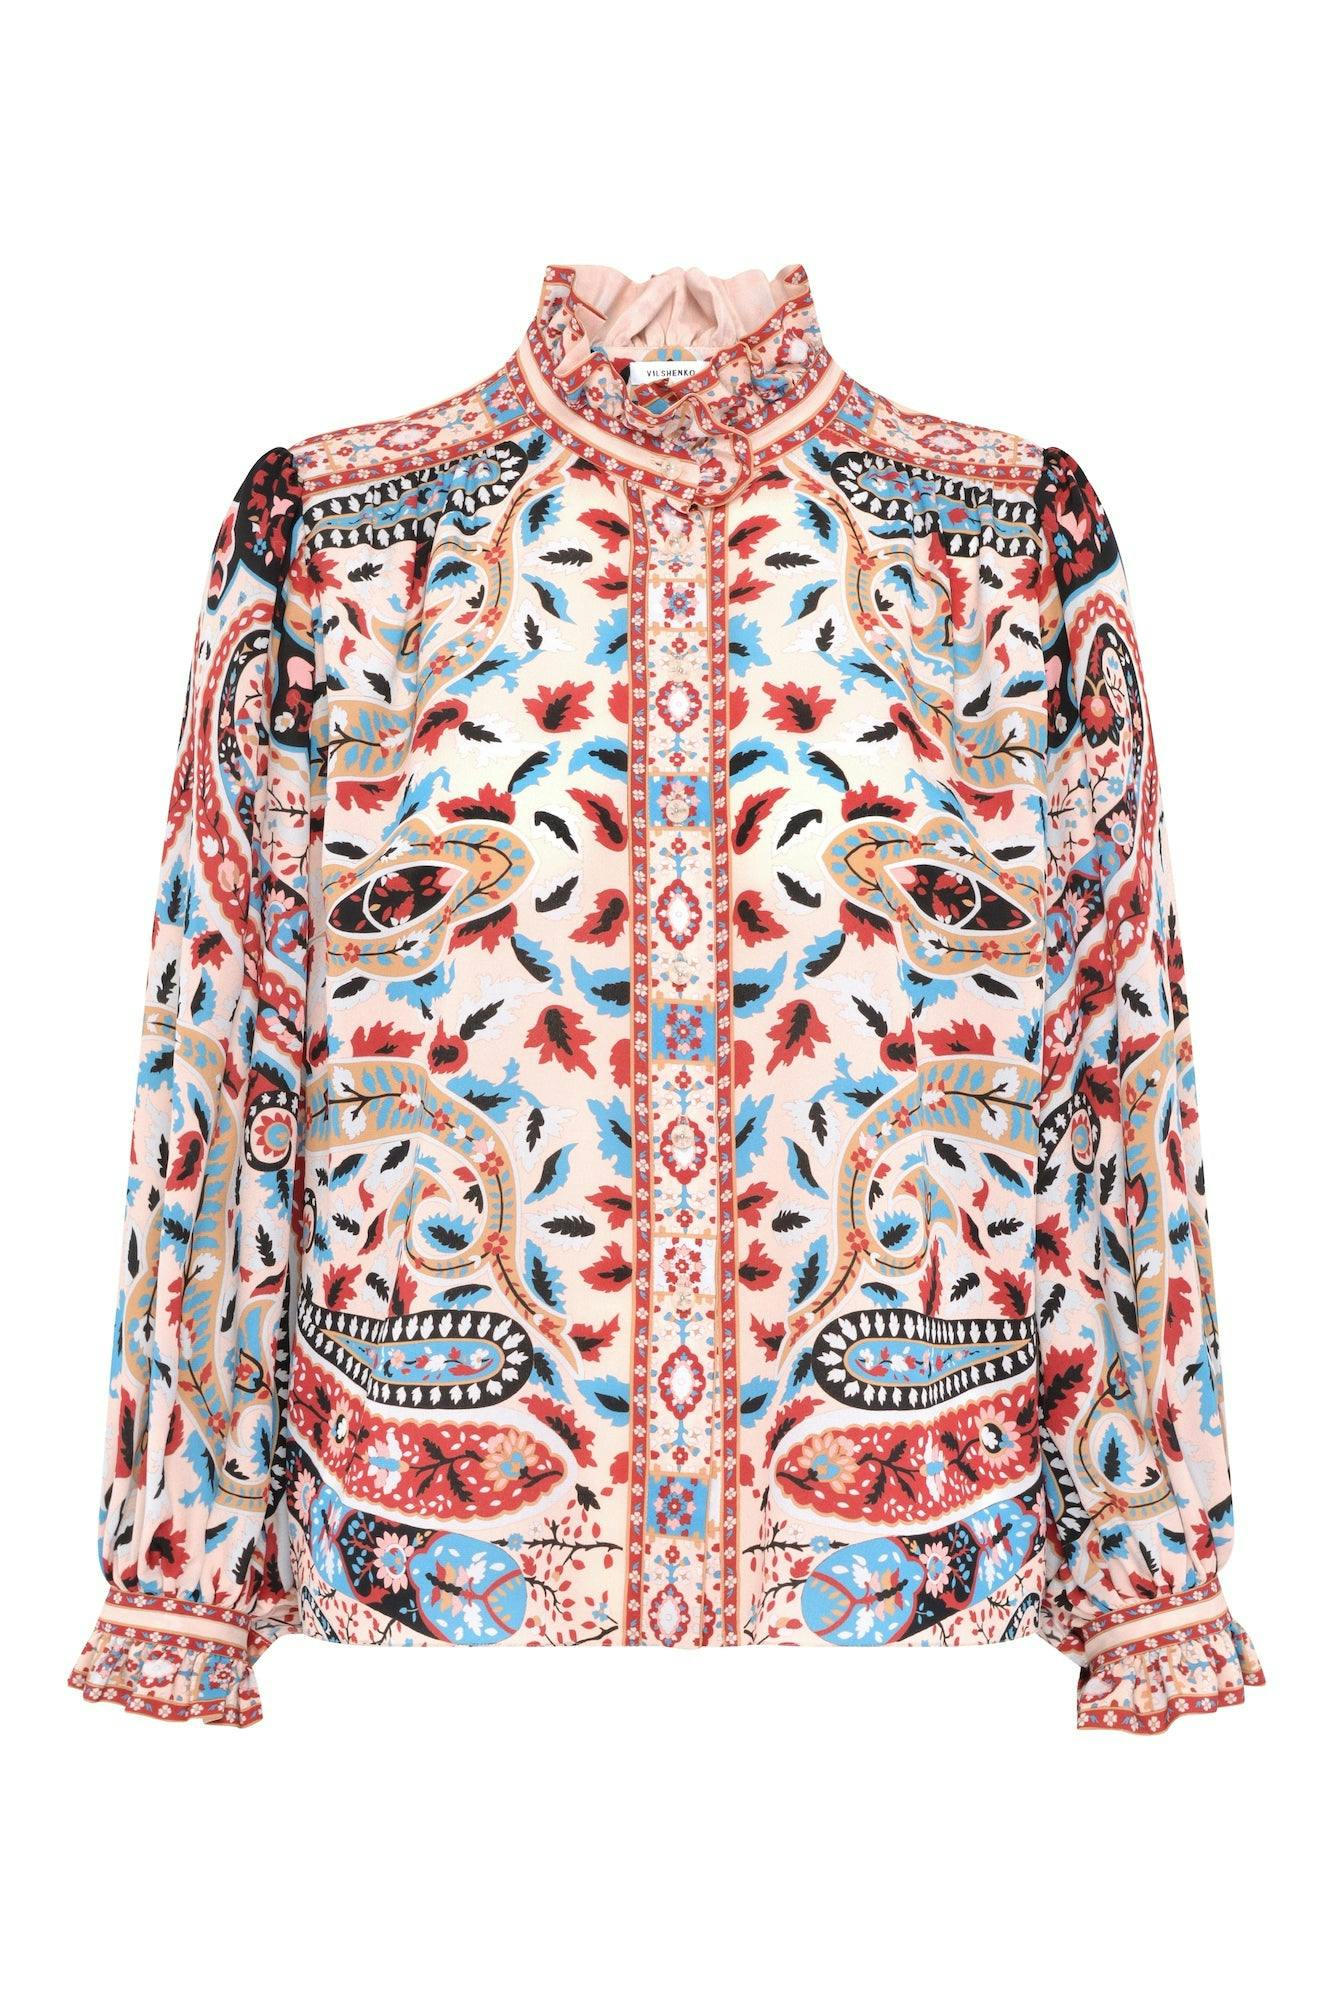 Elena ornate paisley print blouse